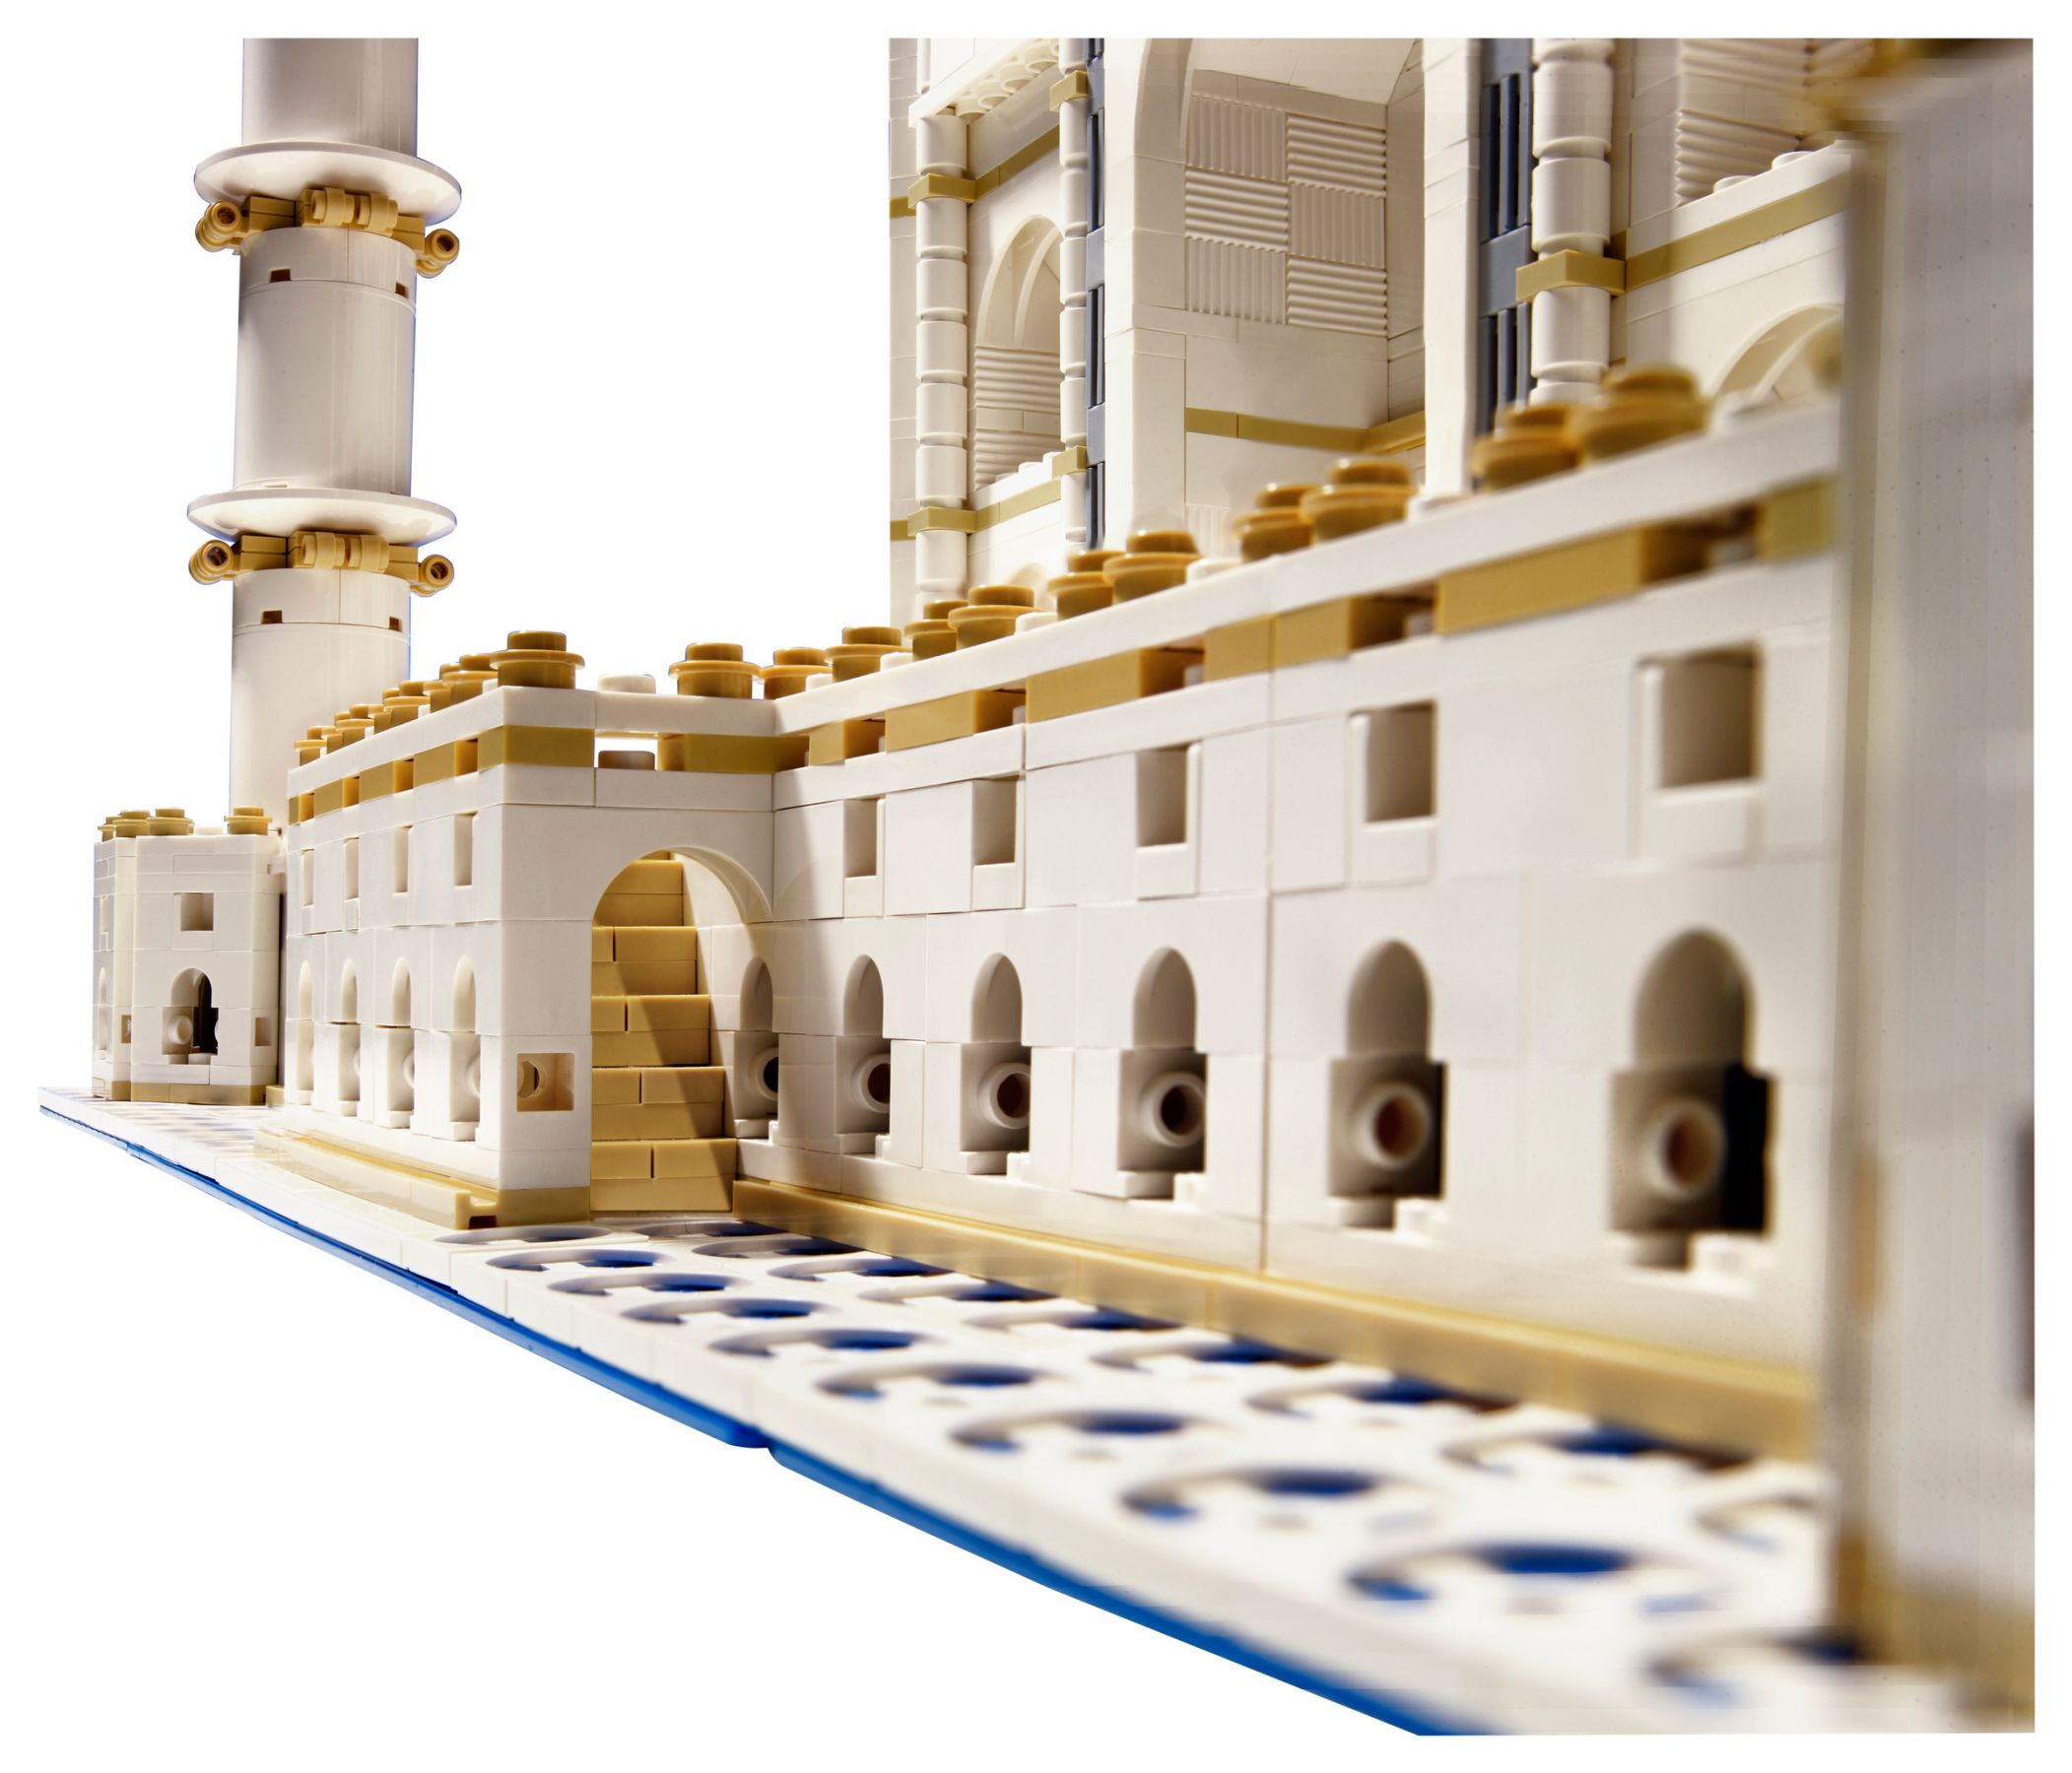 LEGO Advanced Models 10256 Taj Mahal LEGO_10256_alt4.jpg